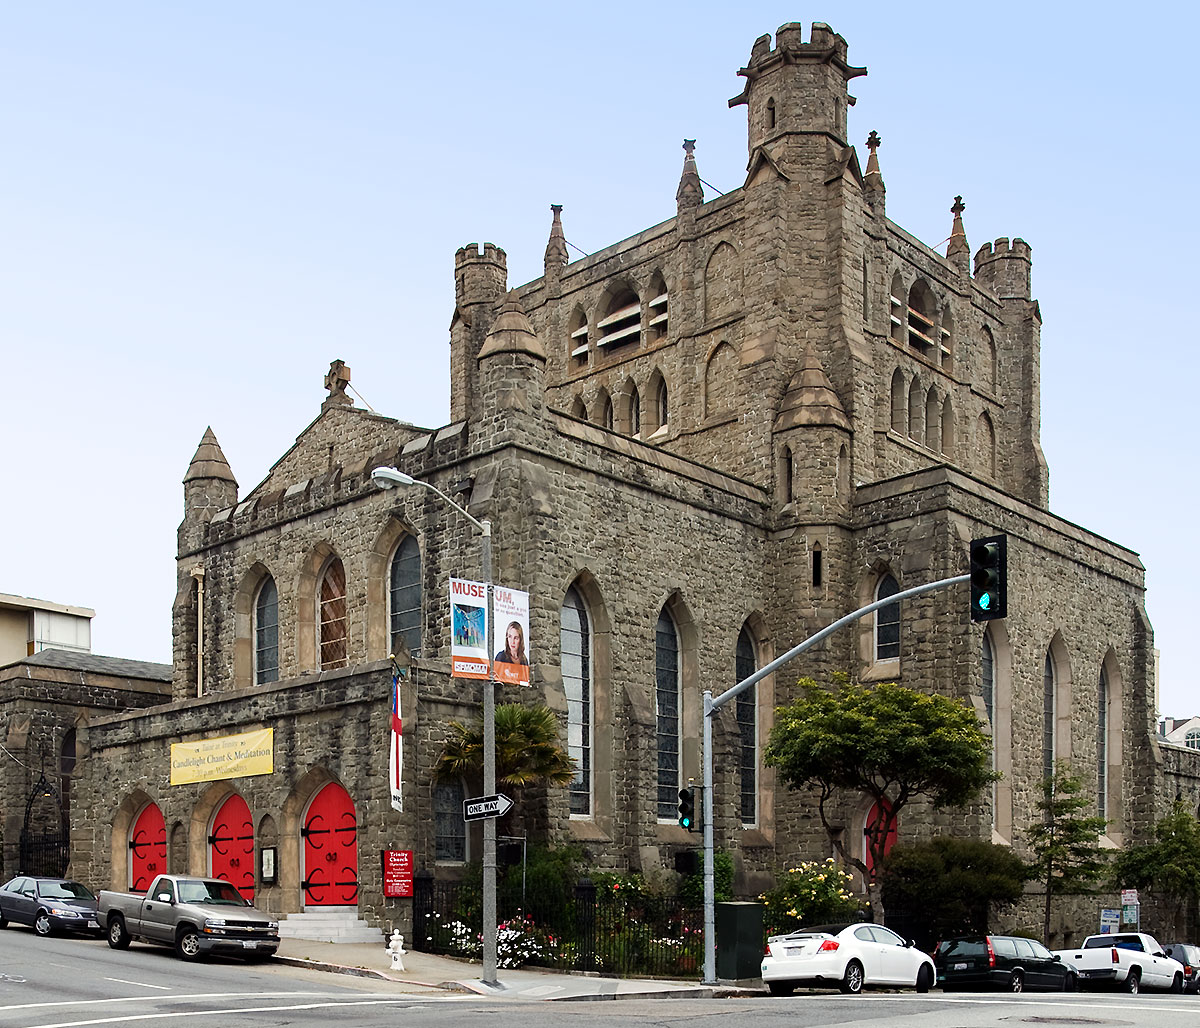 San Francisco Landmark 65: Trinity Episcopal Church